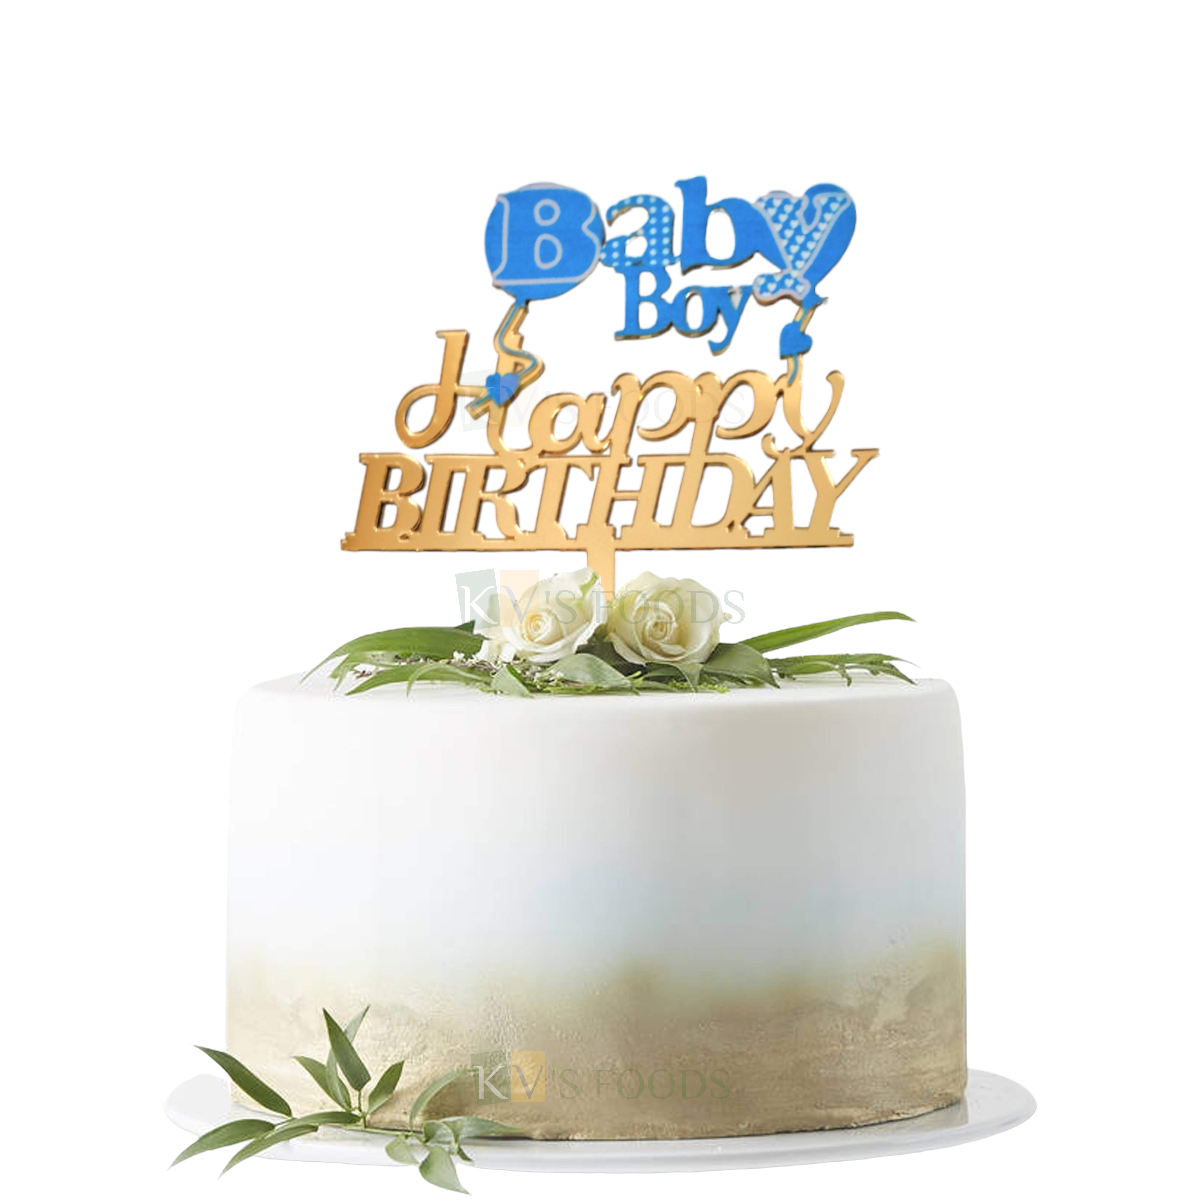 1PC Golden Acrylic Shiny Glass Finish Happy Birthday Baby Boy with Hearts Cake Topper, Blue Colour Boys Birthday Theme Unique Elegant Font Design Cake Topper DIY Cake Decorations